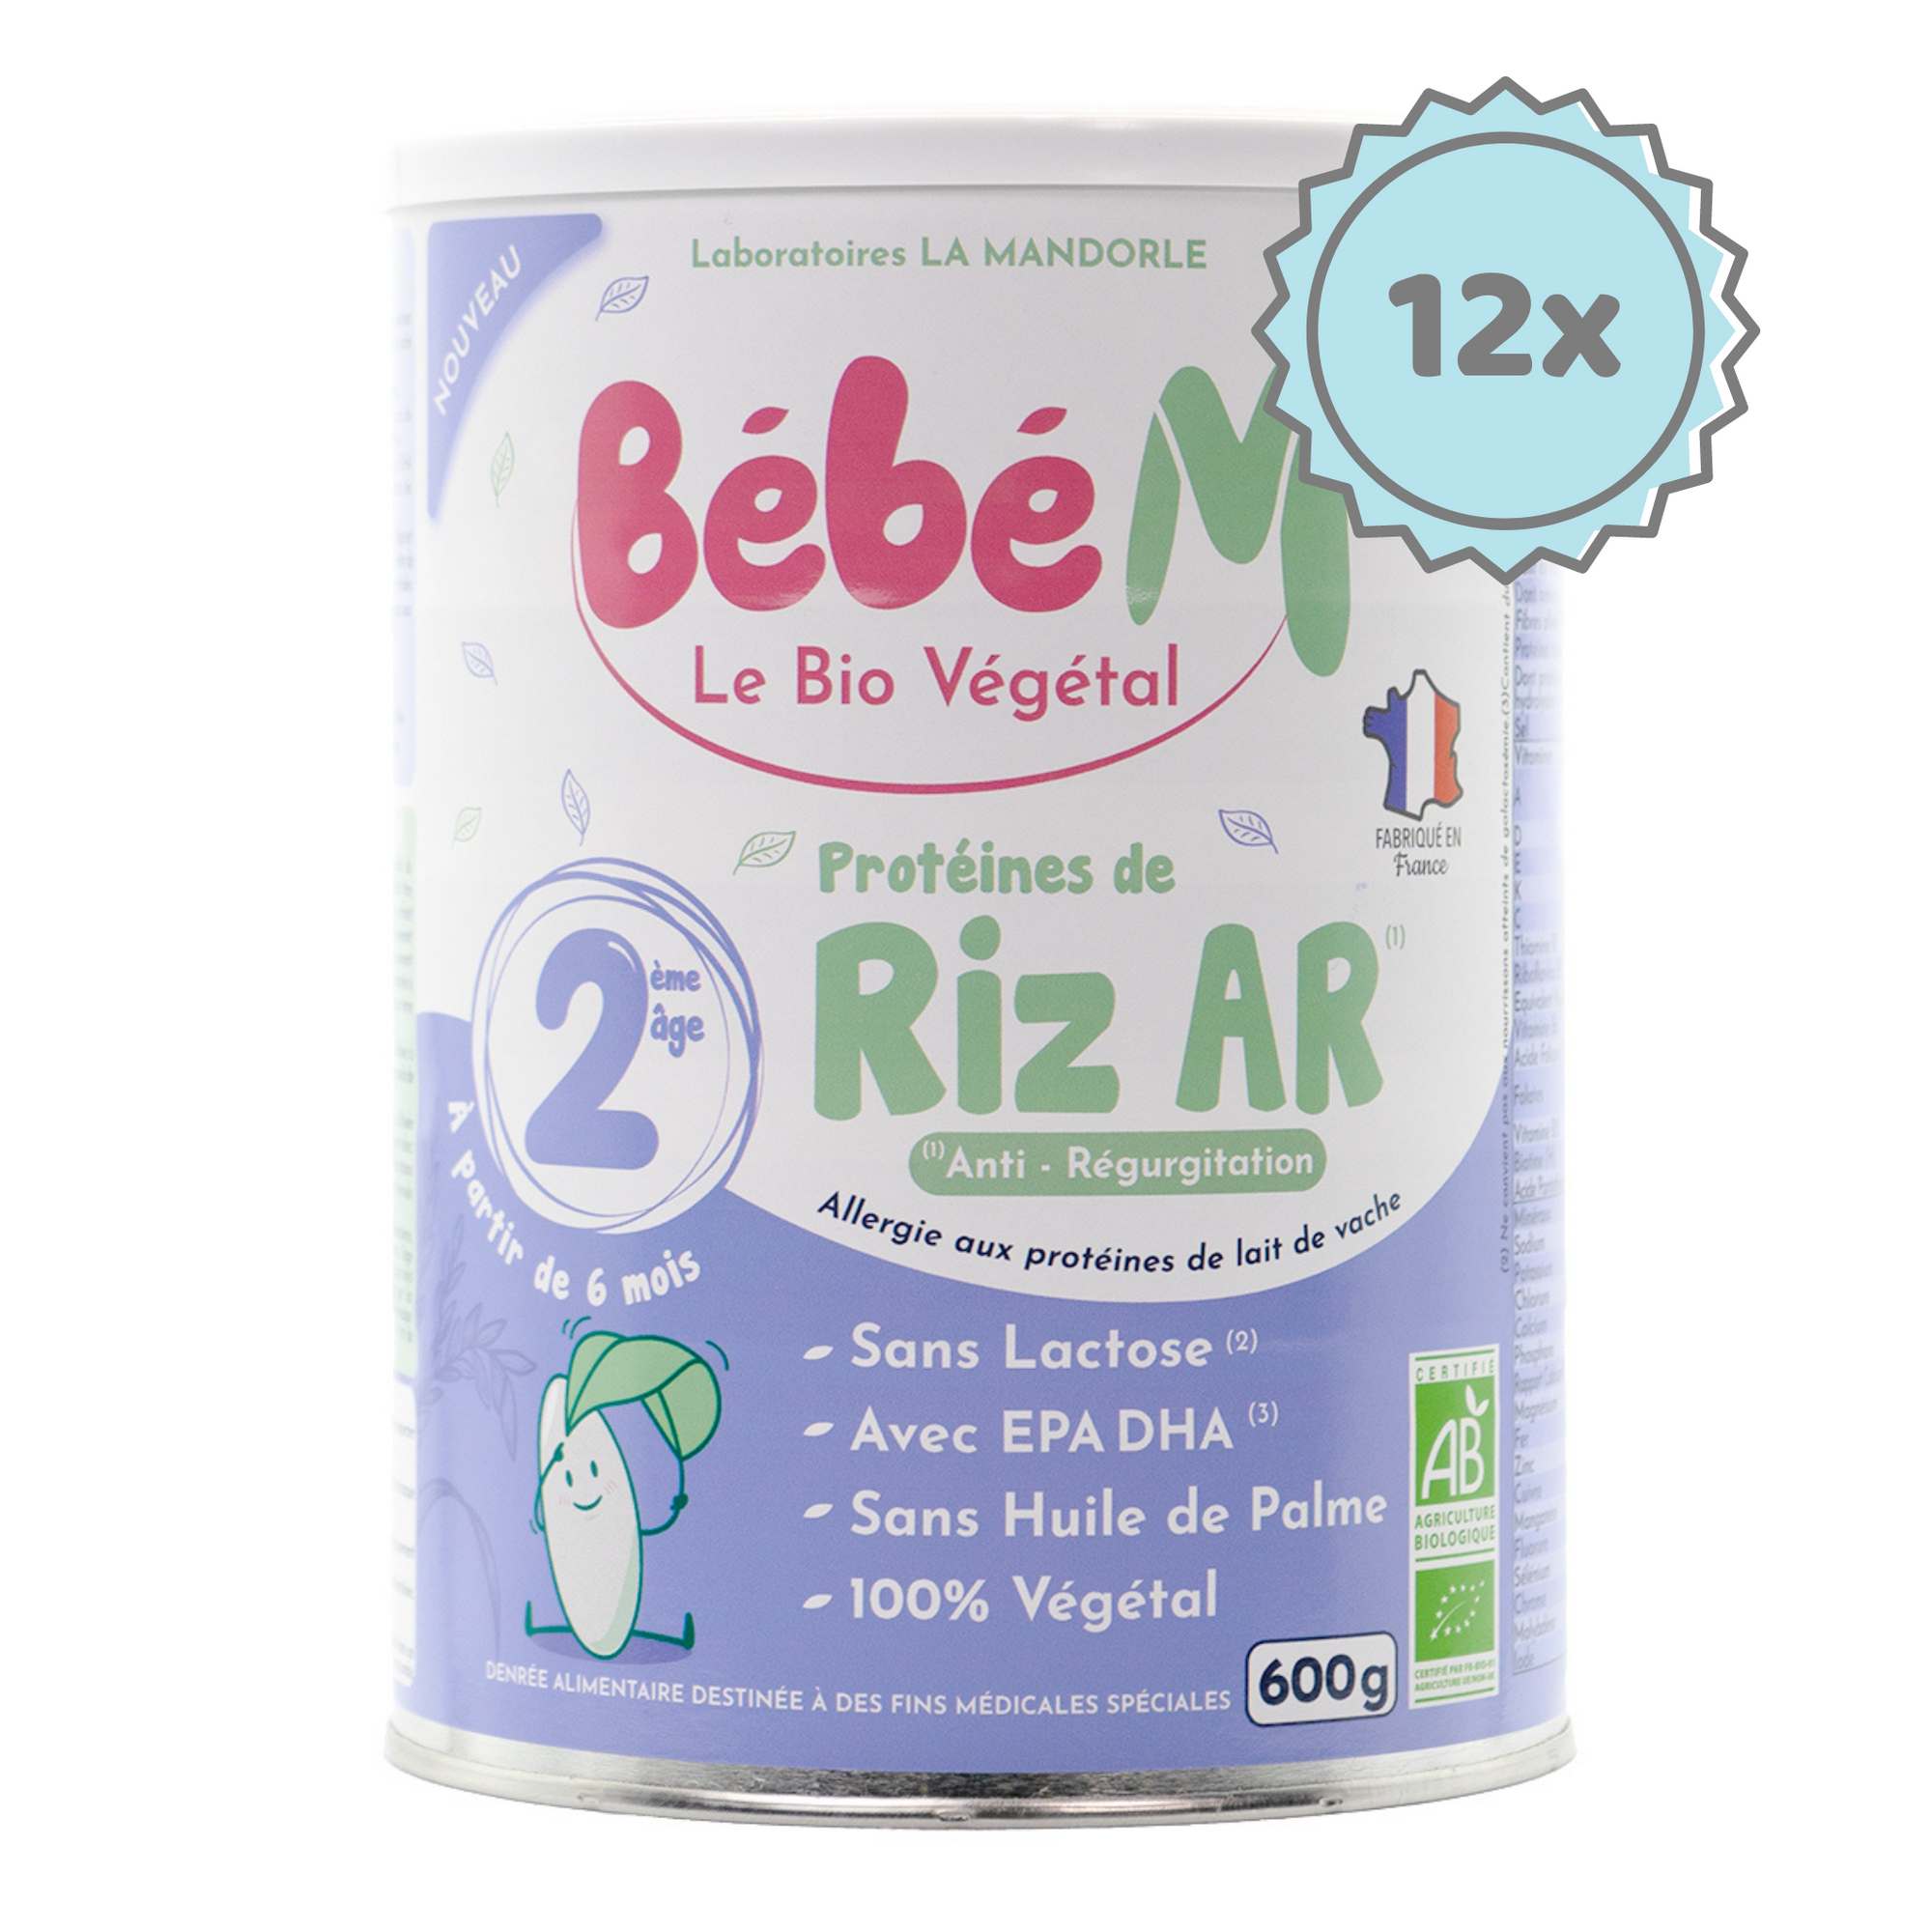 Bebe M (Bebe Mandorle) Organic Anti-Reflux Rice-Based Formula - Stage 2 (6+ months) | Organic Baby Formula | 12 cans